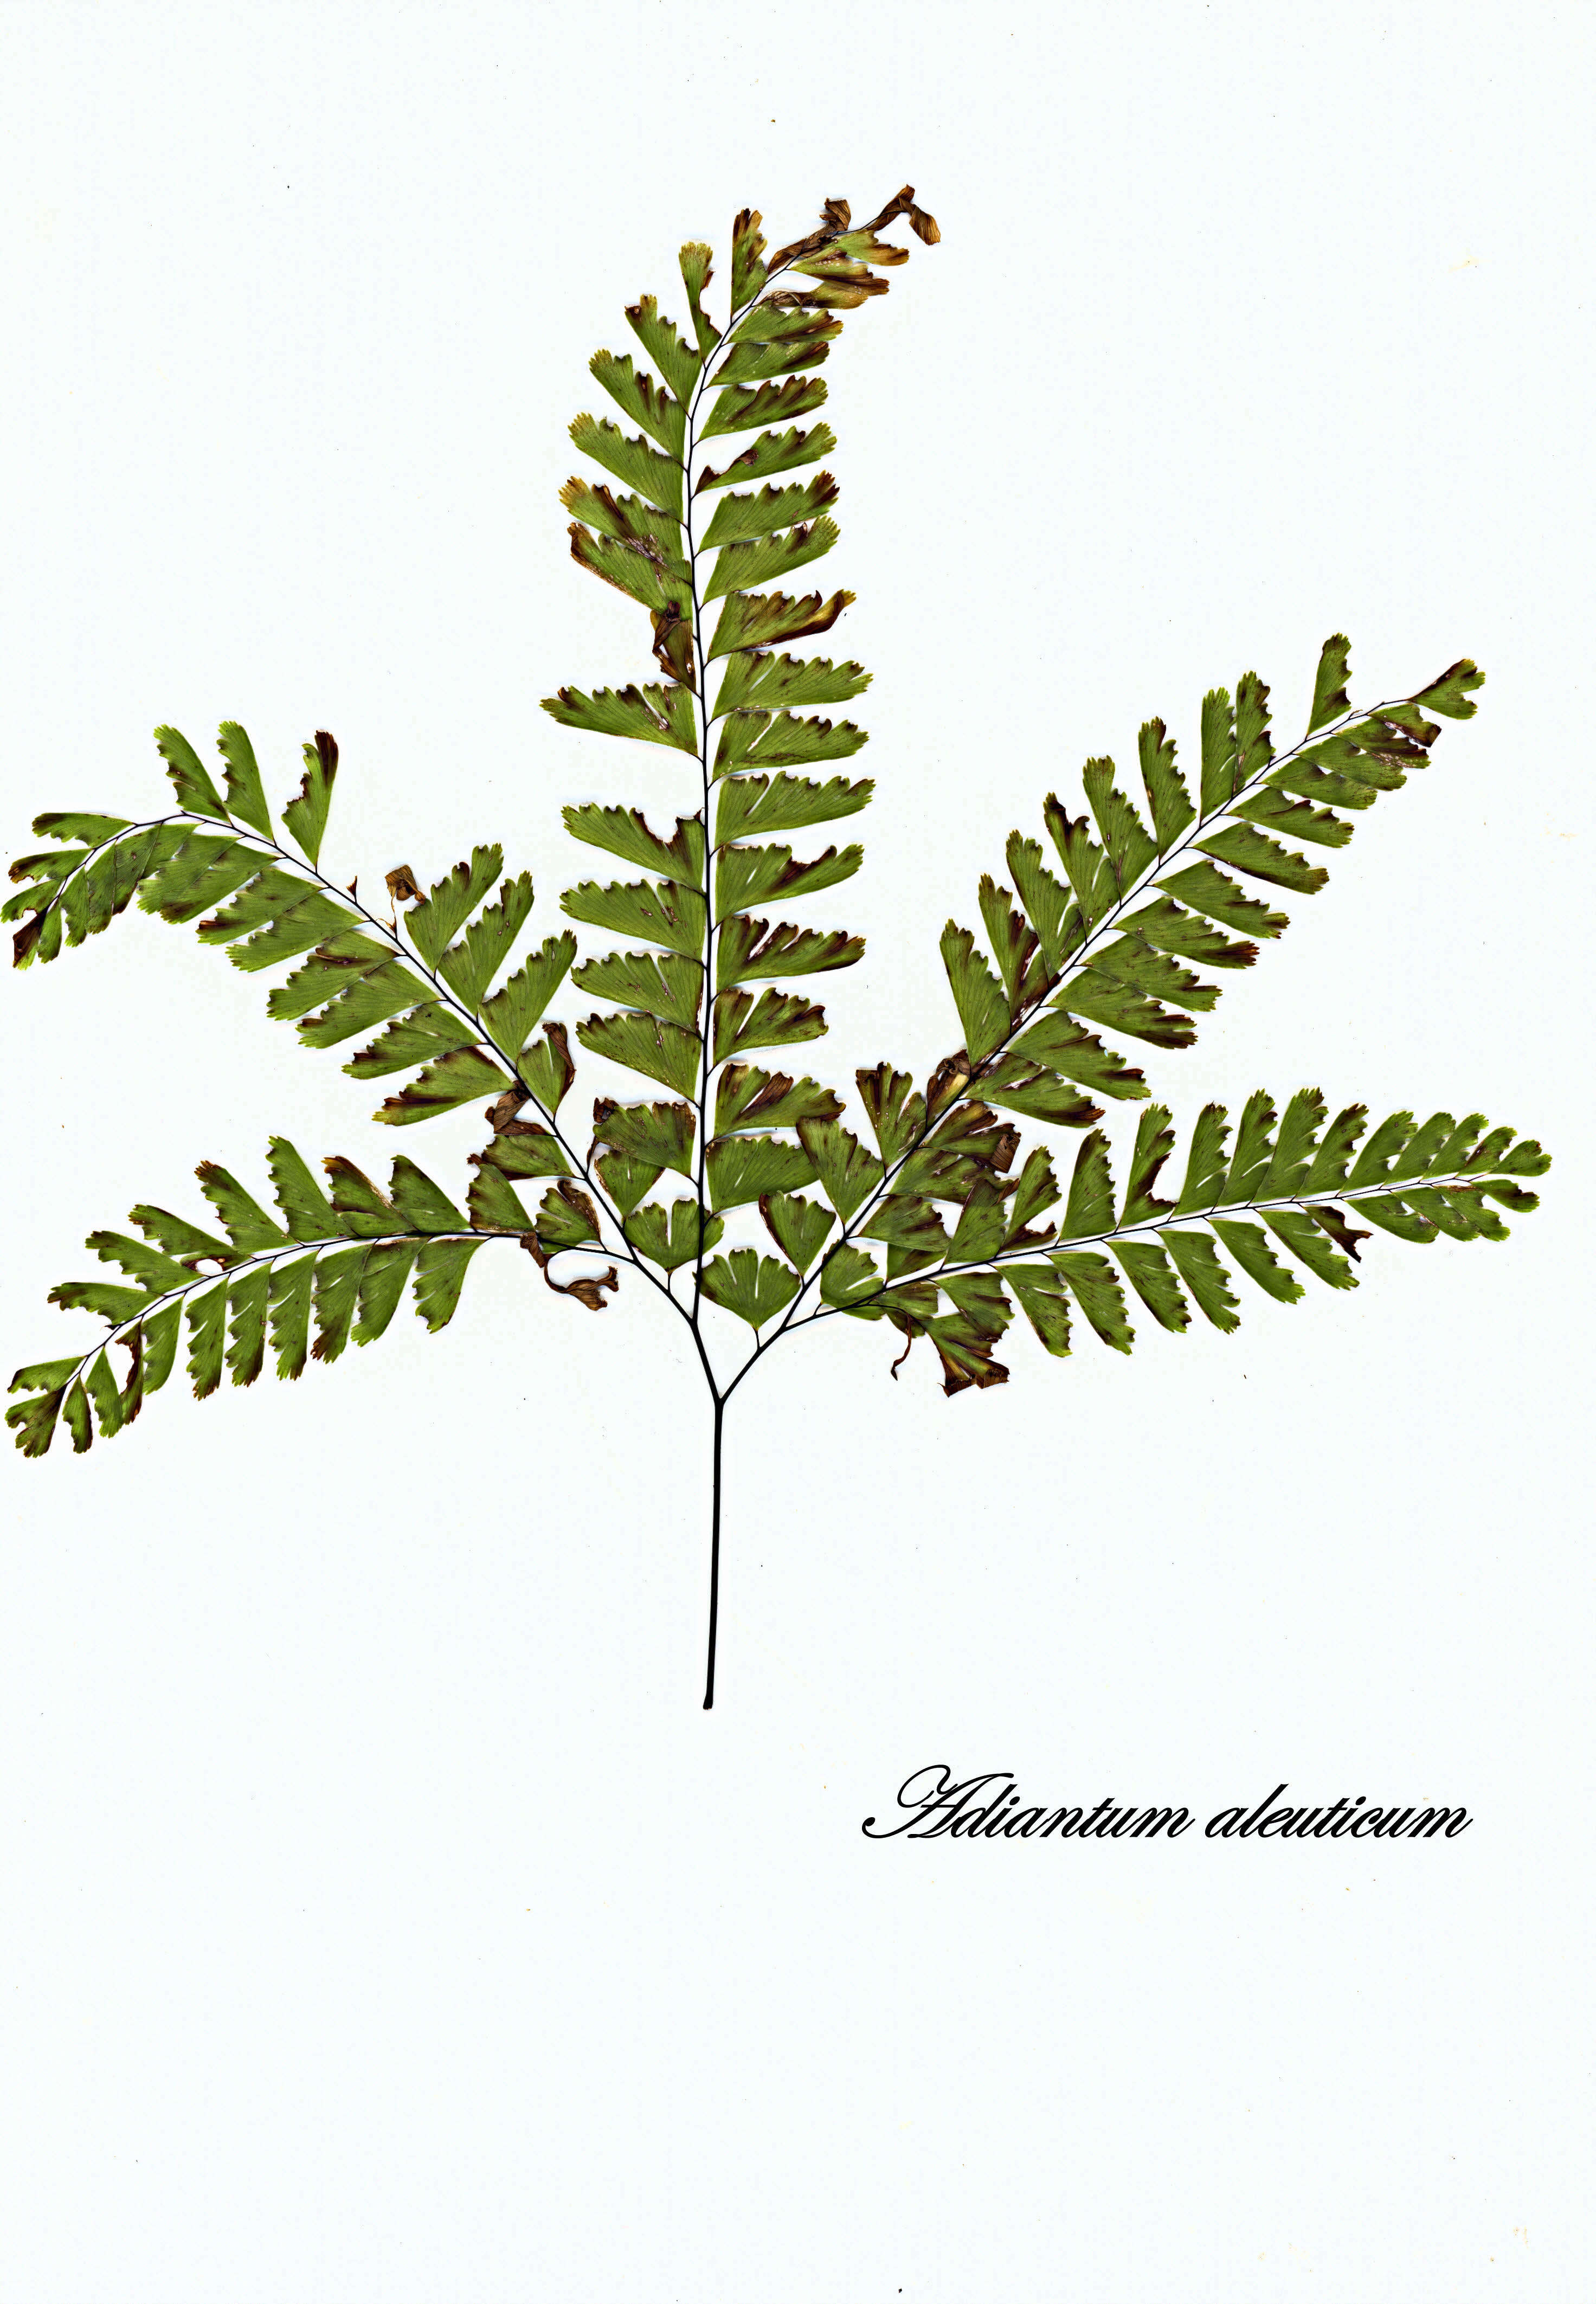 Image of maidenhair fern